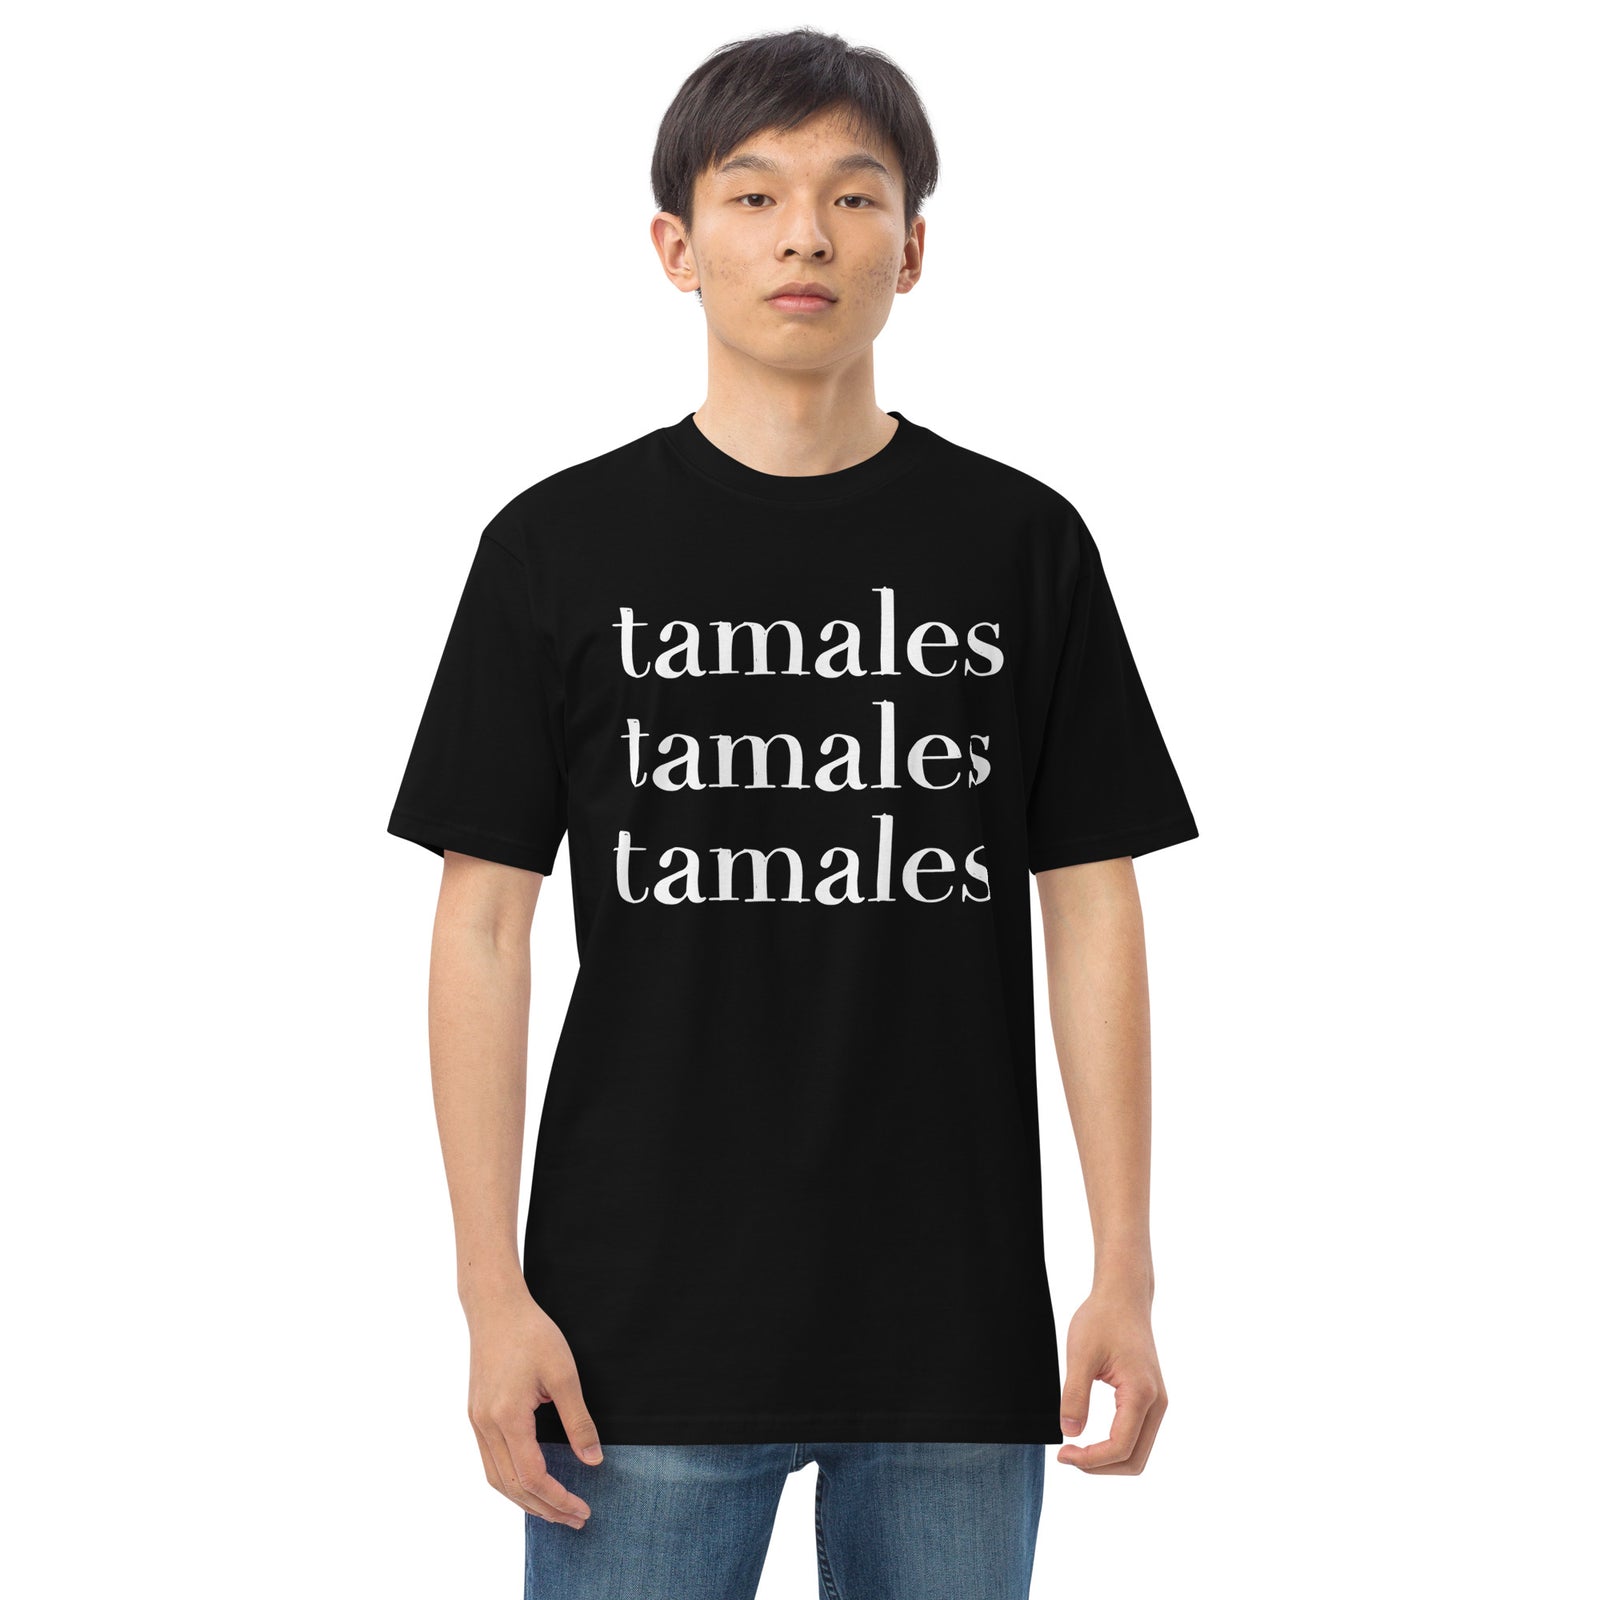 TAMALES TAMALES TAMALES - Men’s premium heavyweight tee